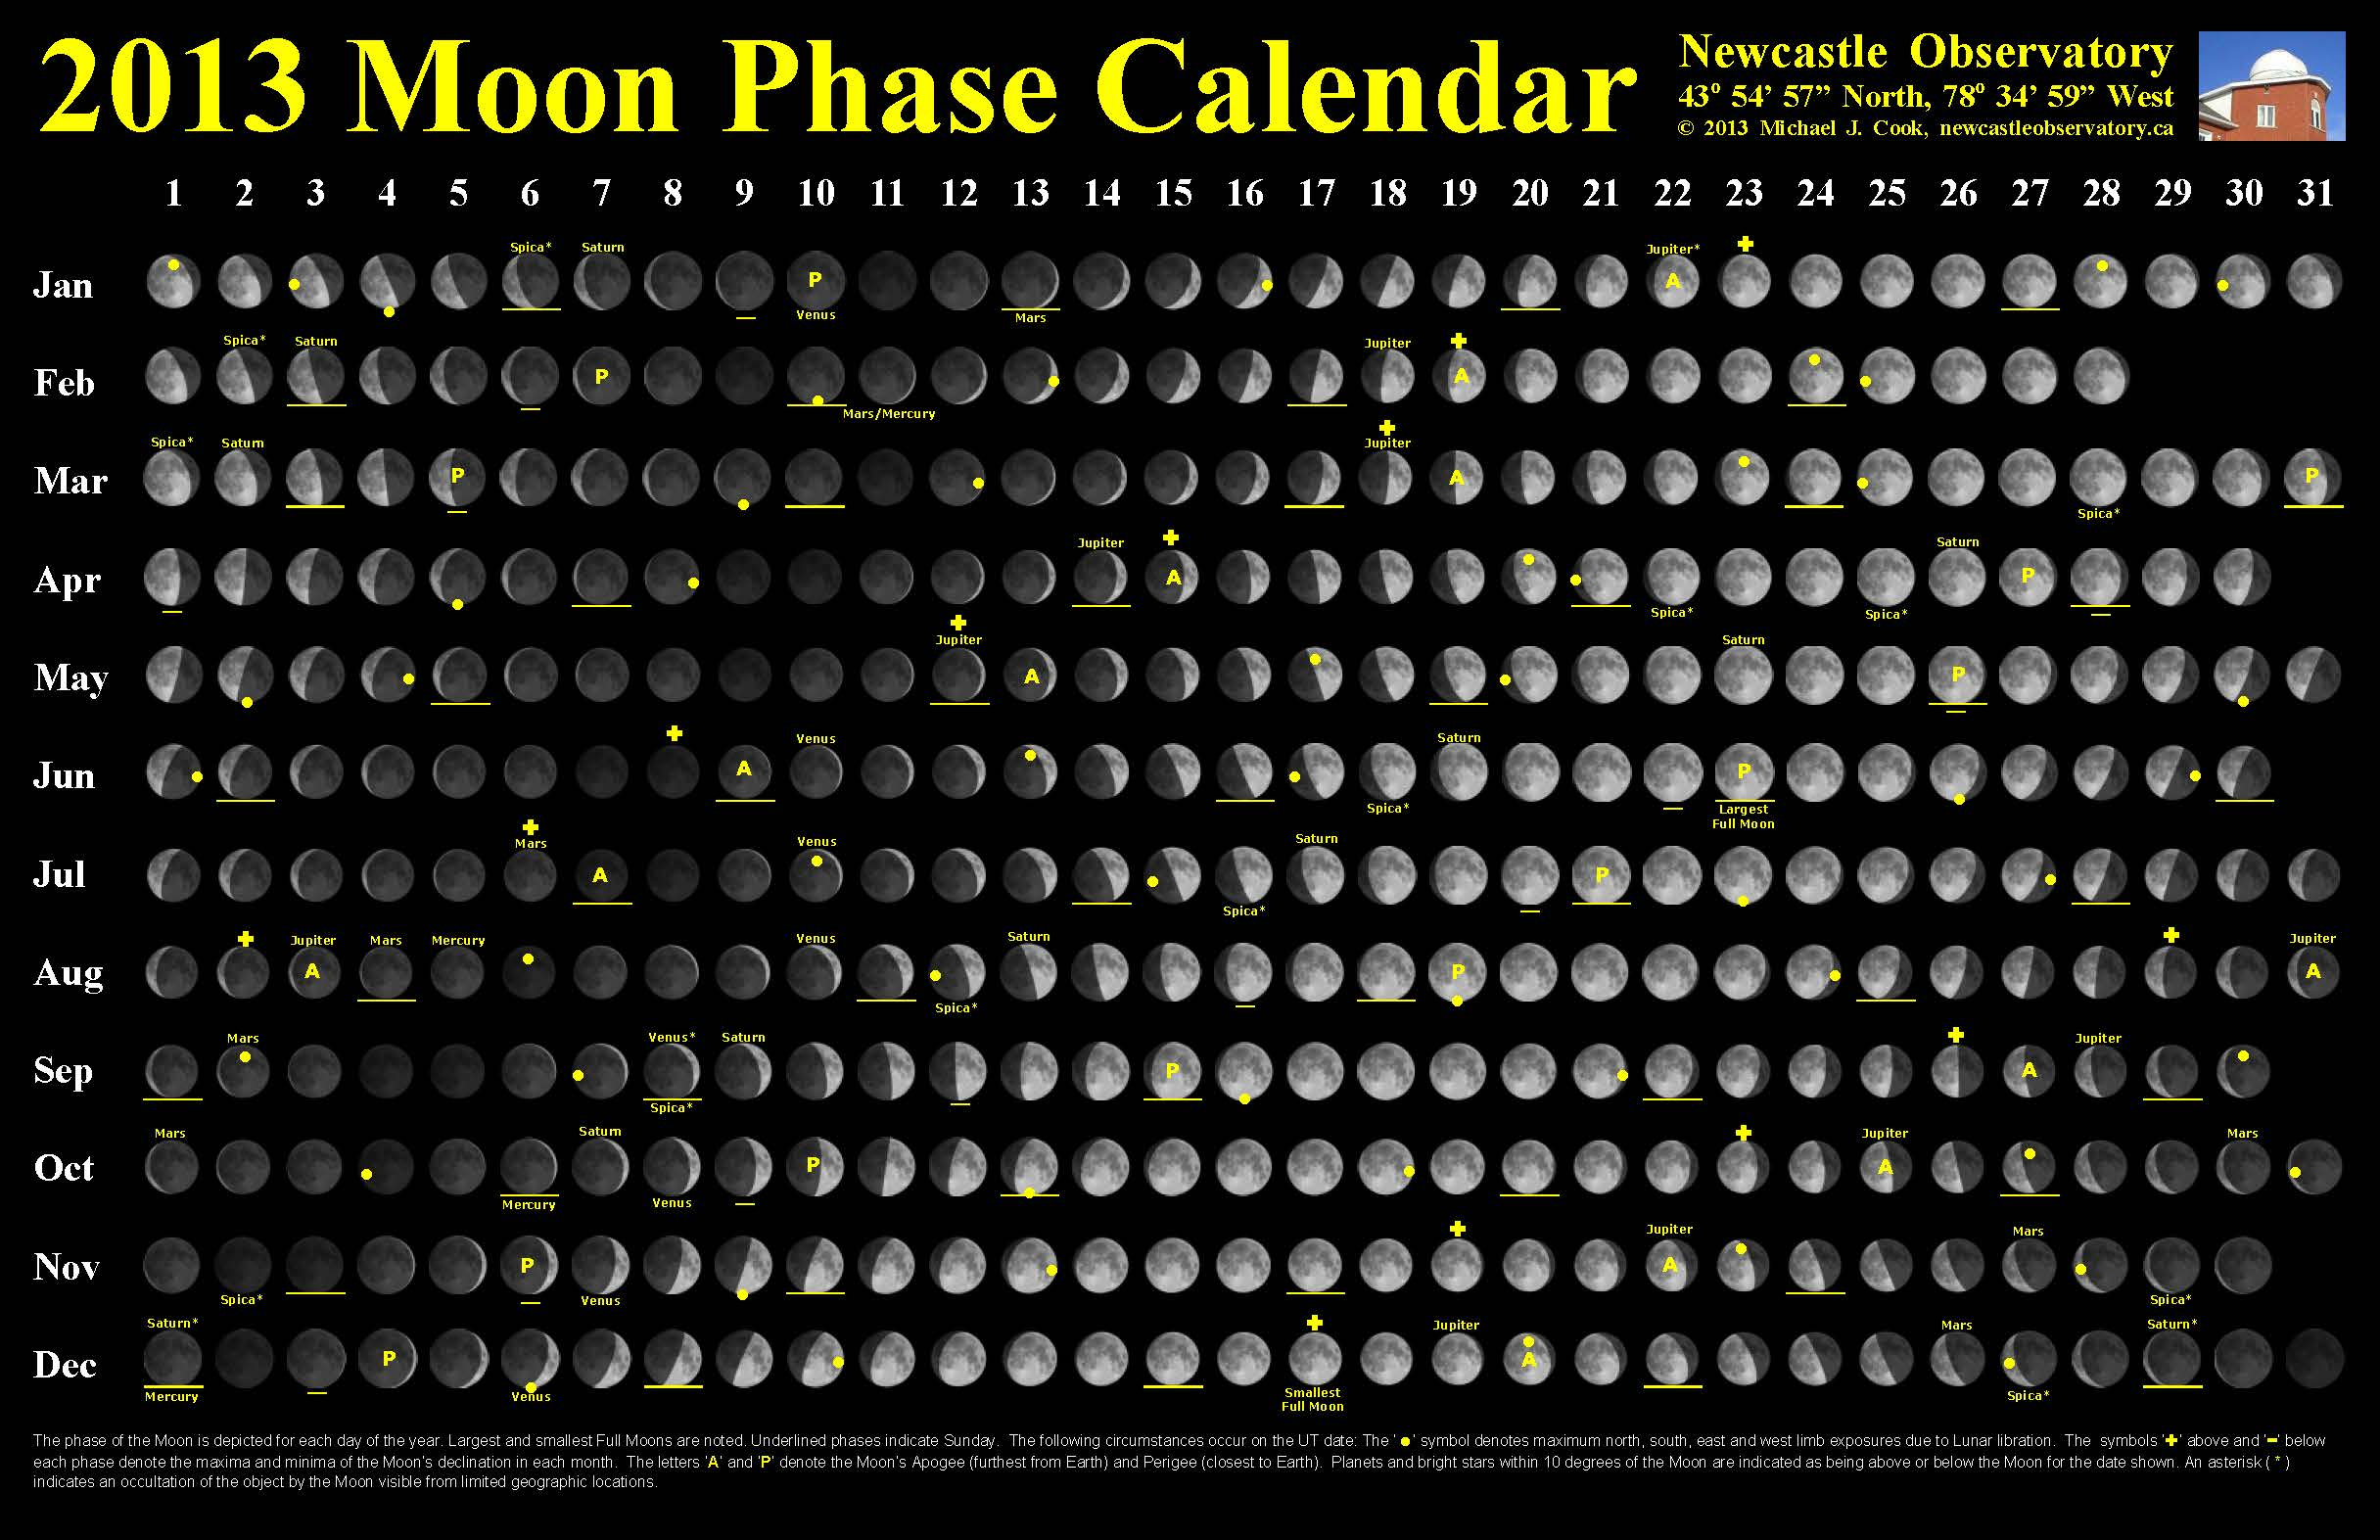 2013 Moon Phase Calendar Newcastle Observatory